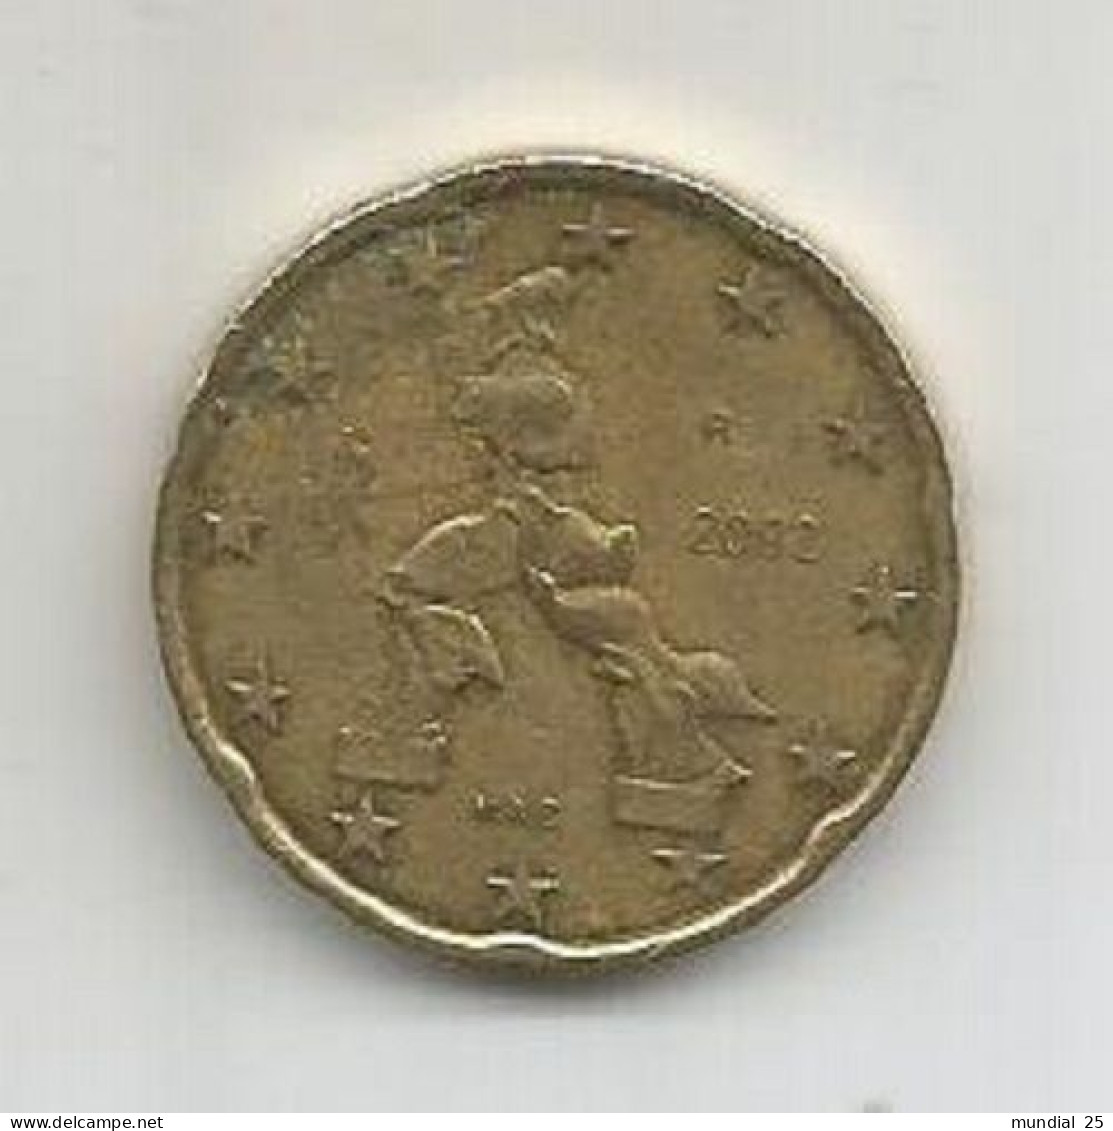 ITALY 20 EURO CENT 2002 (R) - Italie